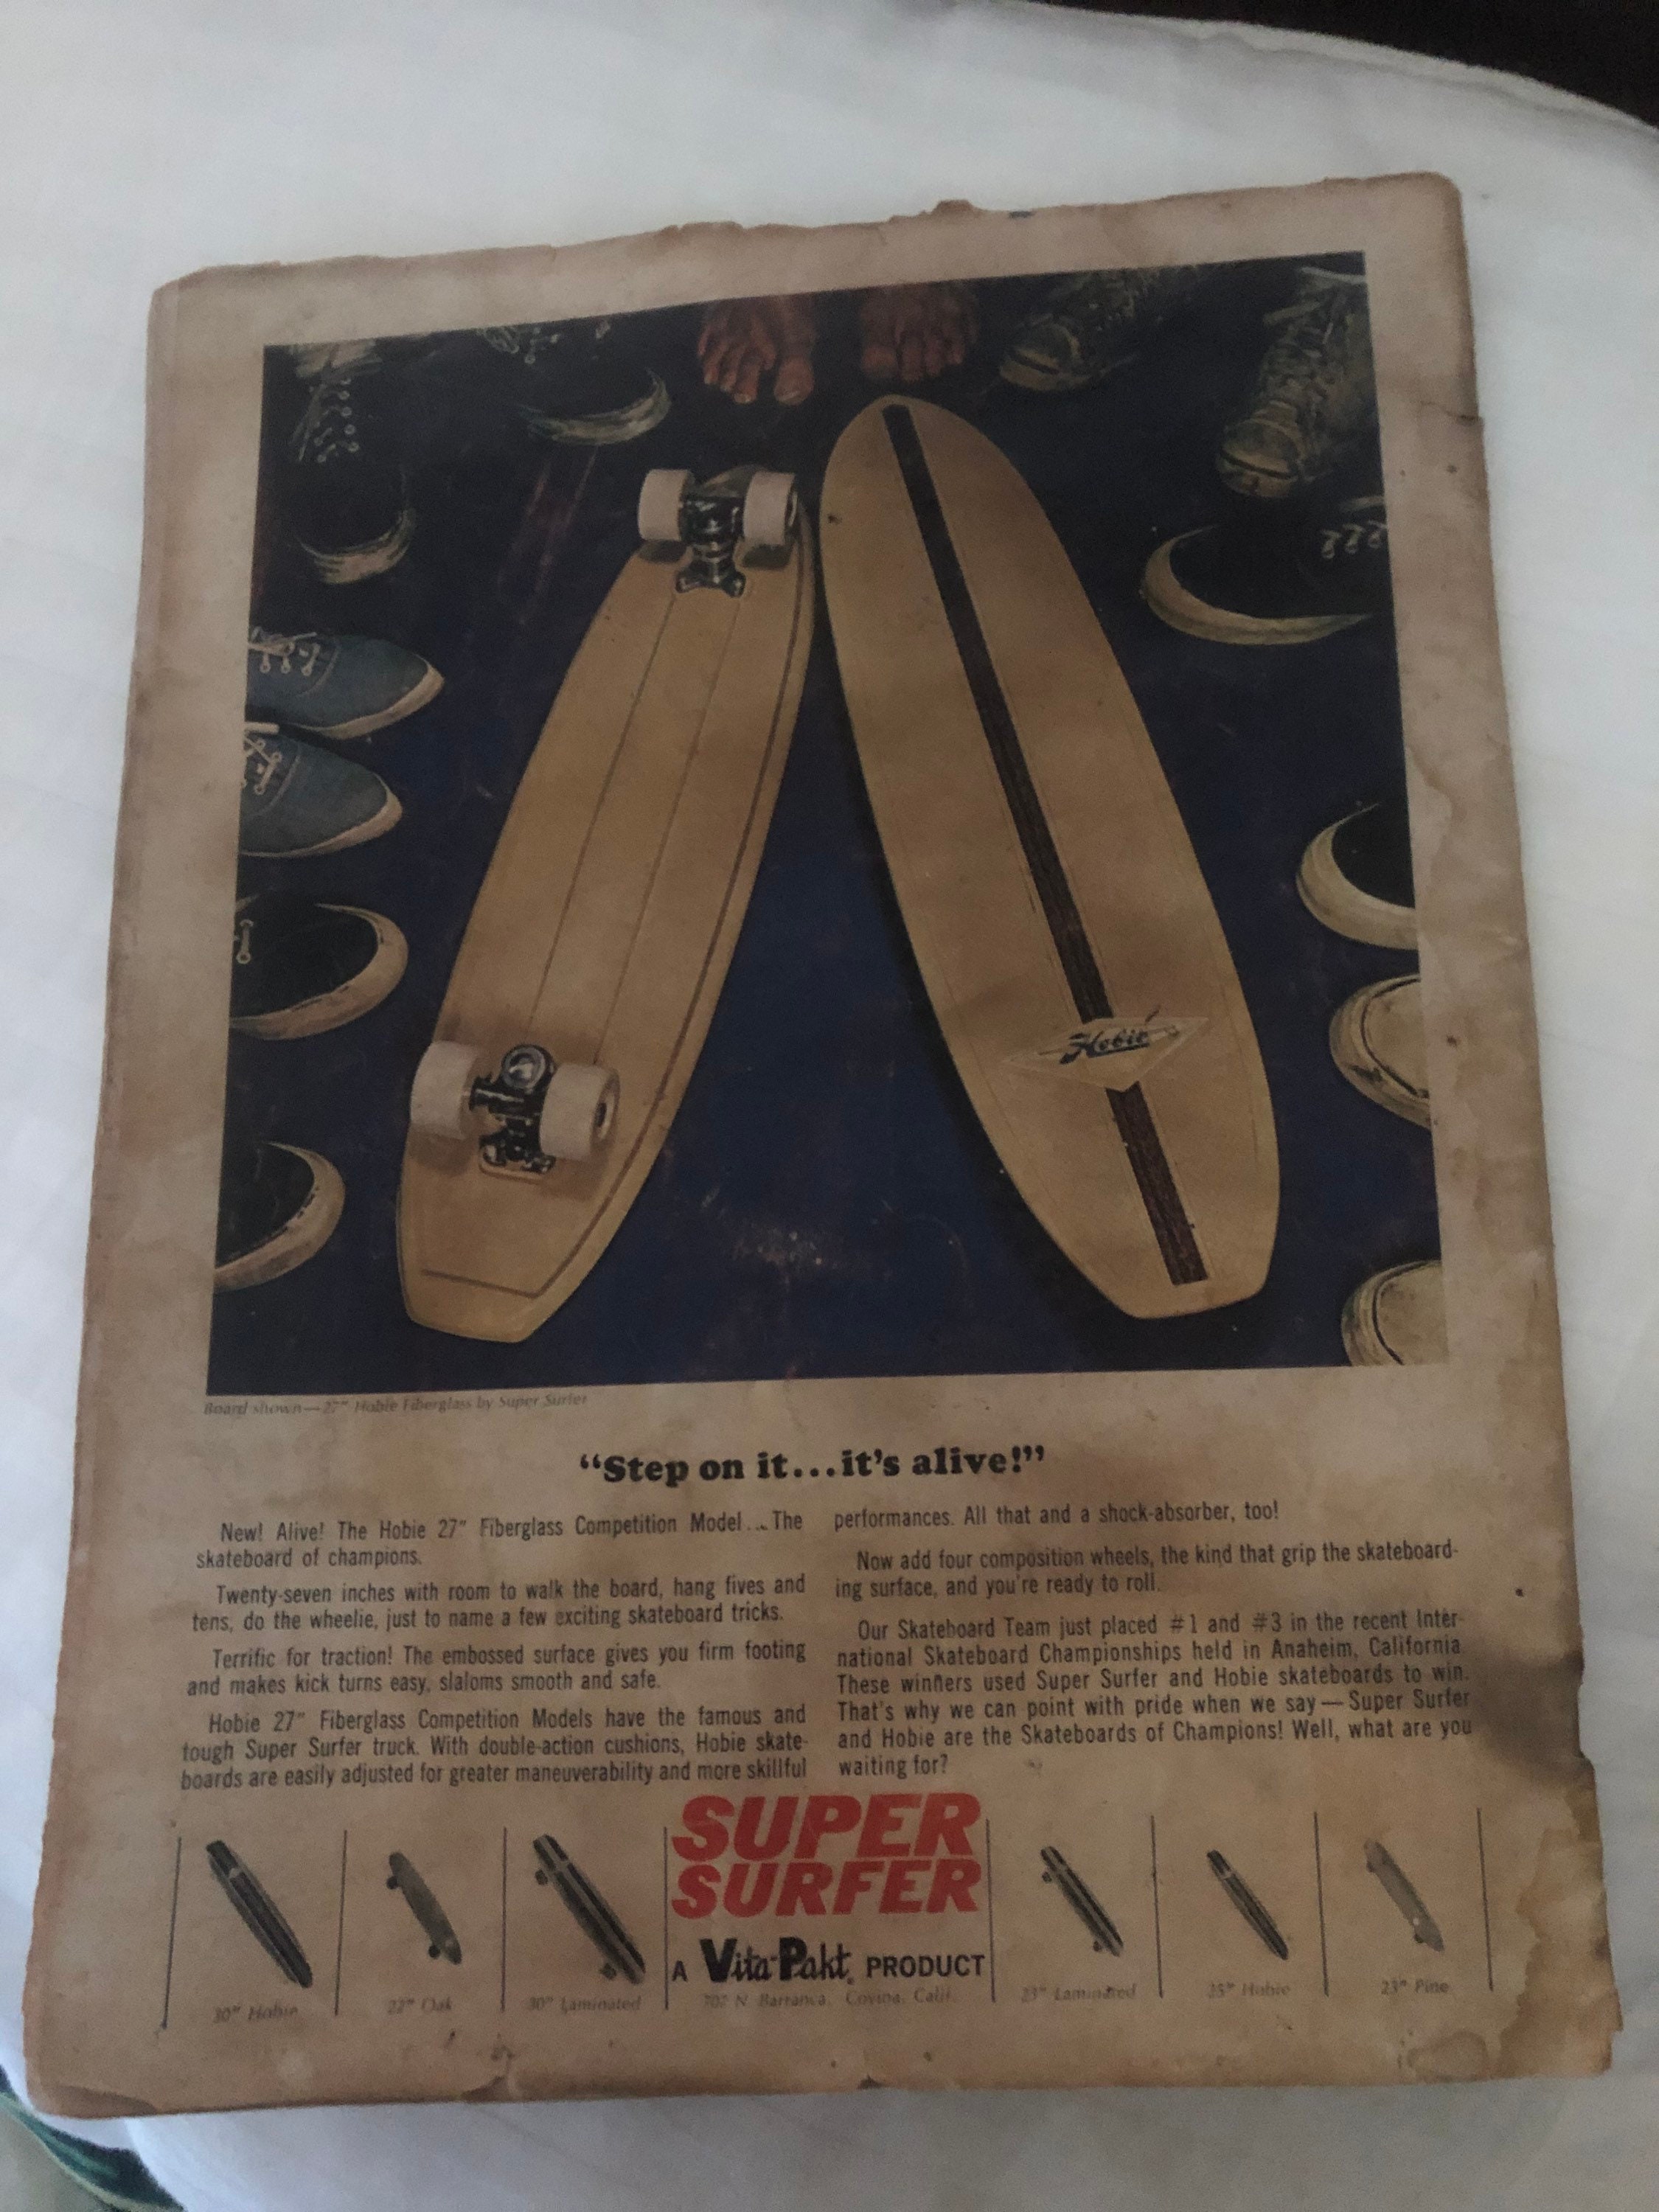 Vintage Super Surfer by Vita Pakt Products